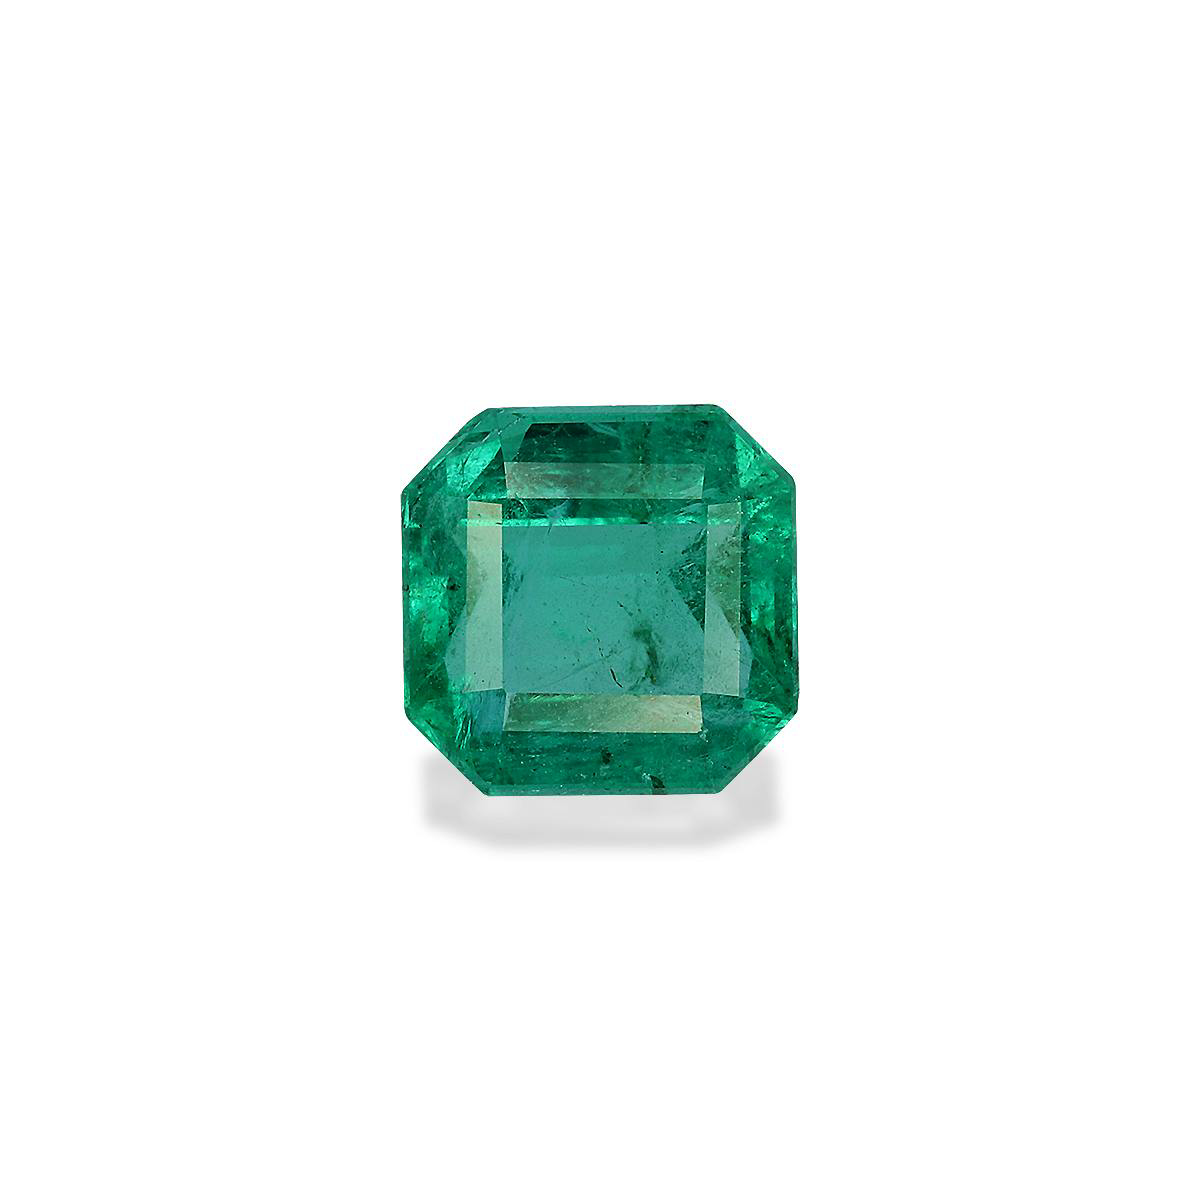 Green Zambian Emerald 1.97ct - 7mm (PG0437)